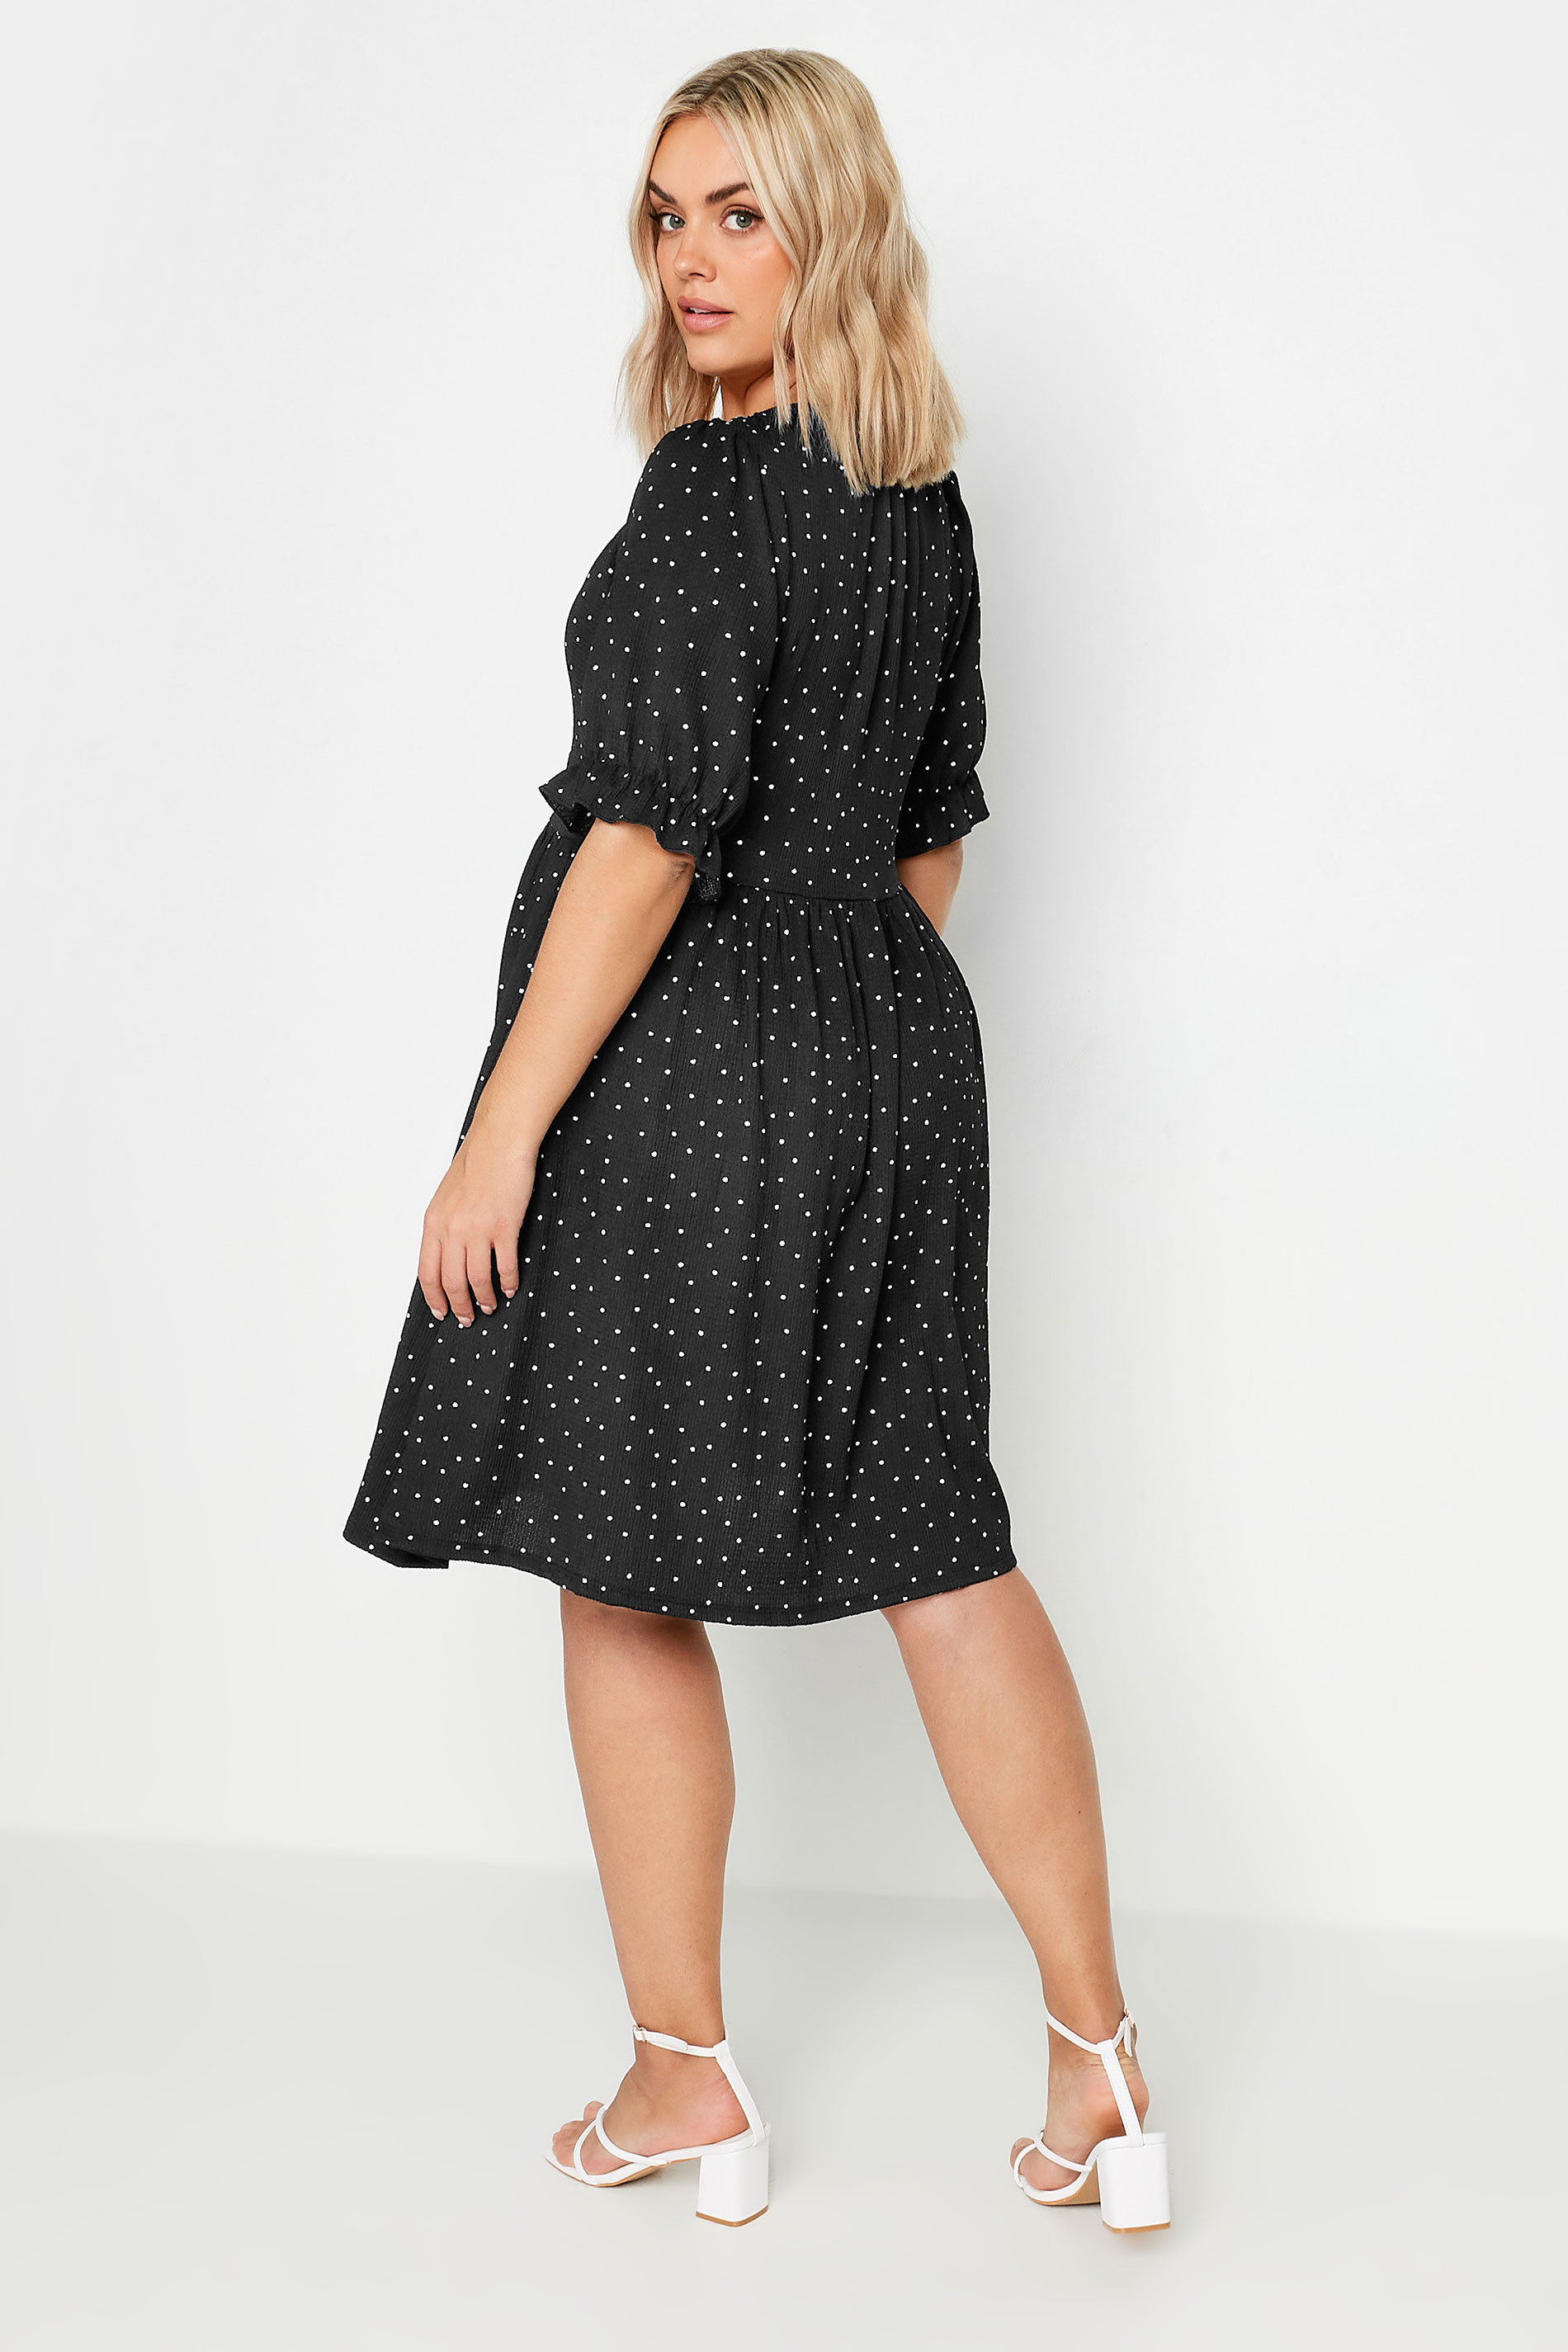 YOURS Plus Size Black Dot Print Smock Mini Dress | Yours Clothing 3